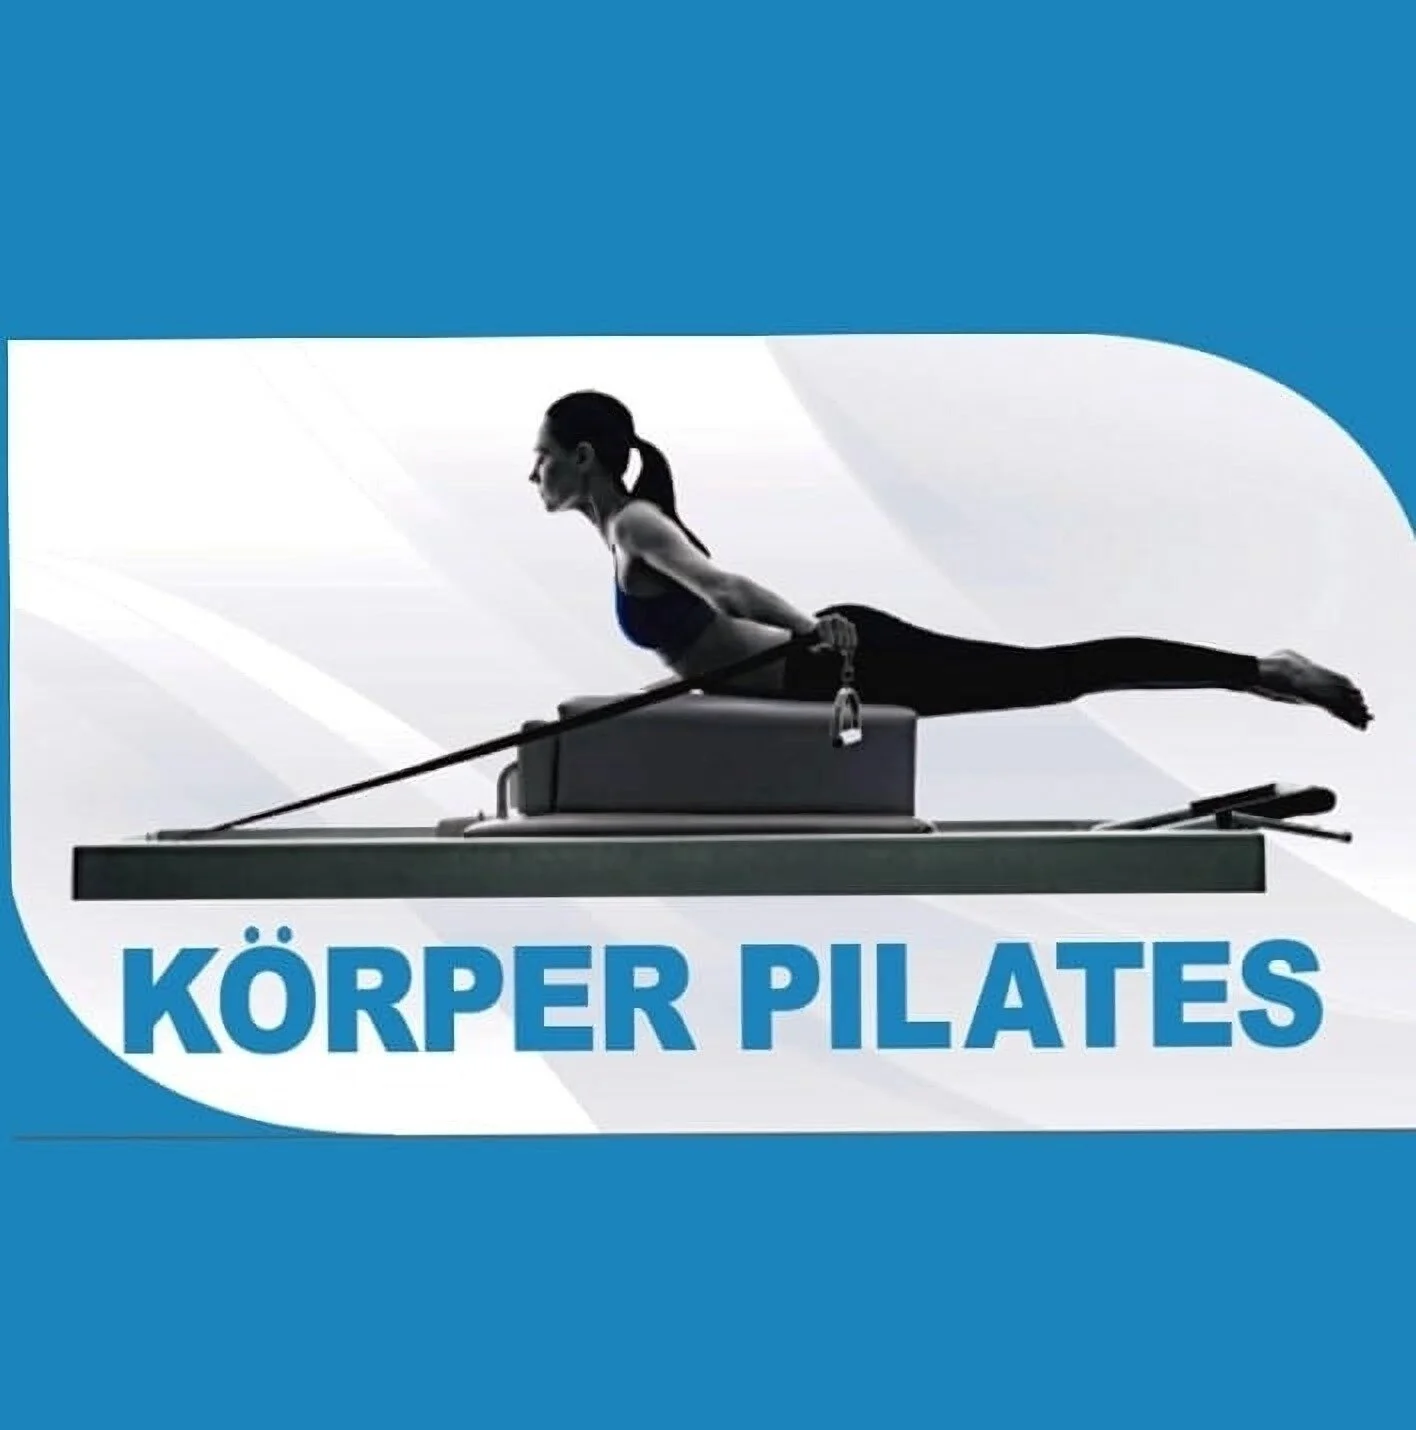 Pilates-korper-pilates-5217